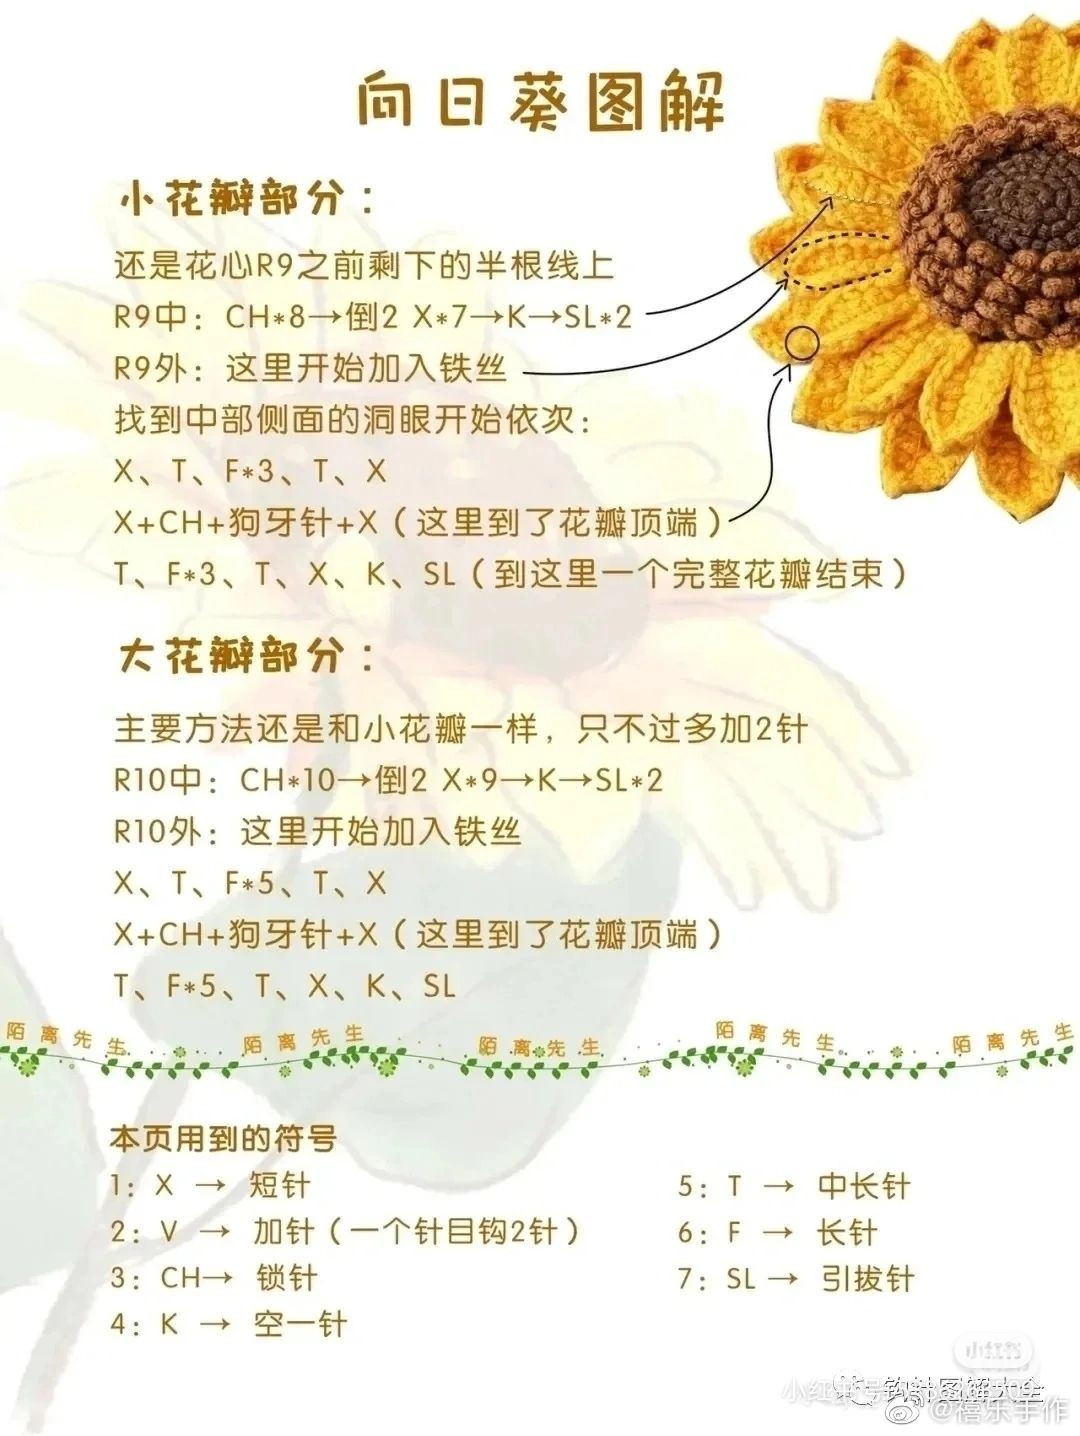 Sunflower keychain, yellow petals, brown pistil, crochet pattern